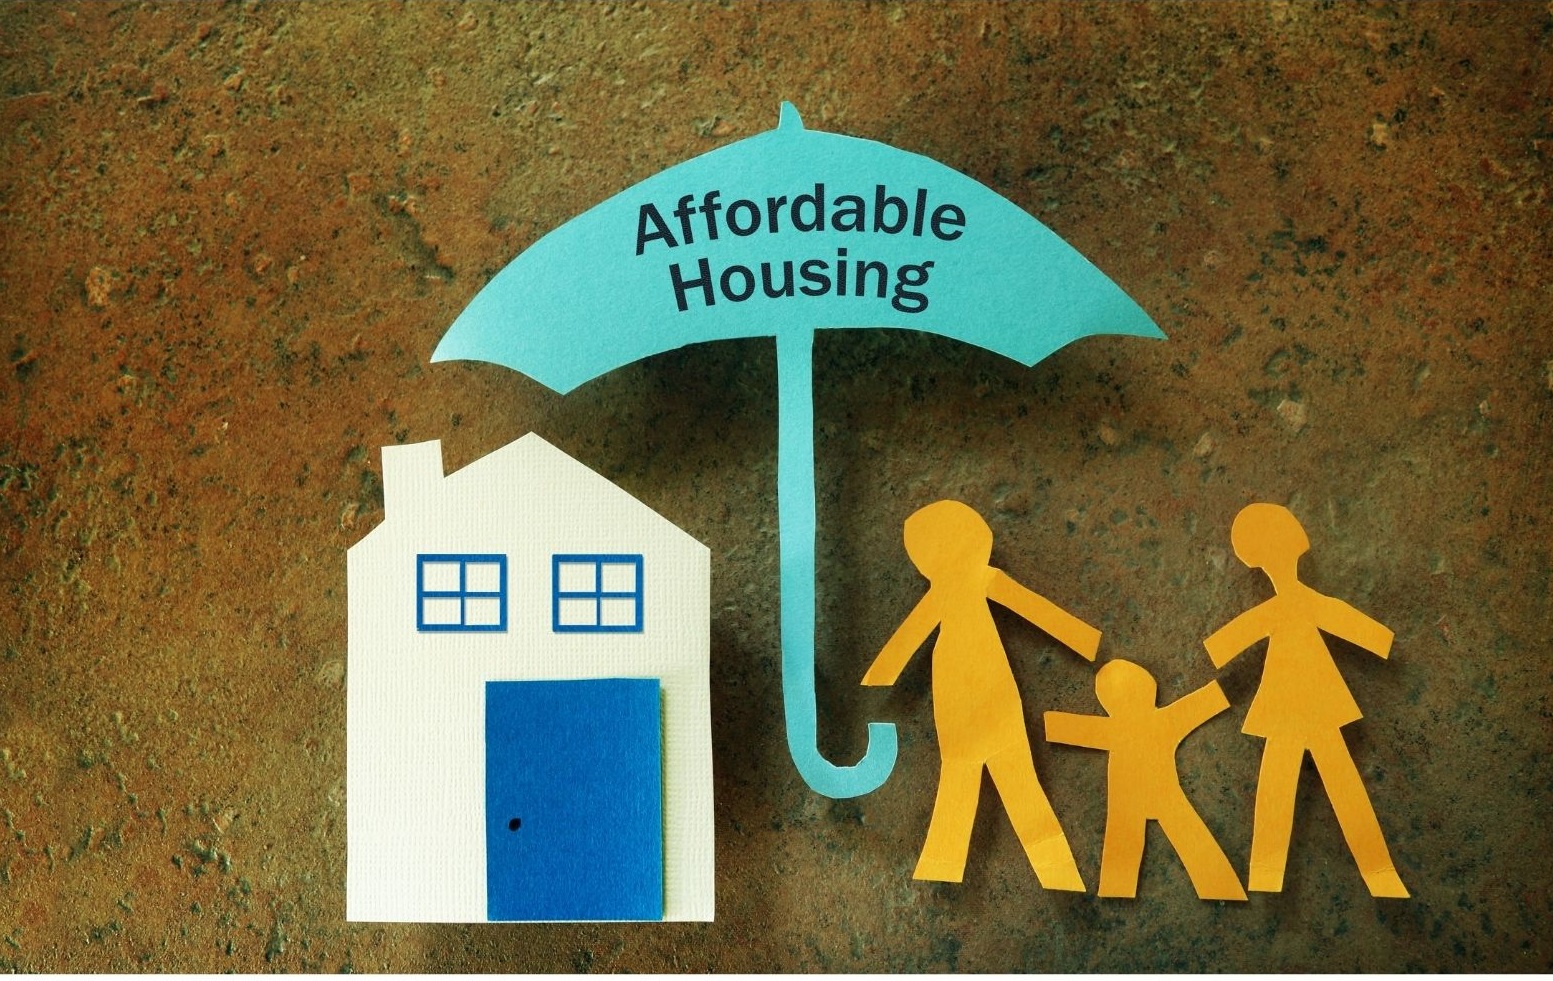 https://www.ashevillenc.gov/wp-content/uploads/2020/09/affordable-housing-illustration.jpg